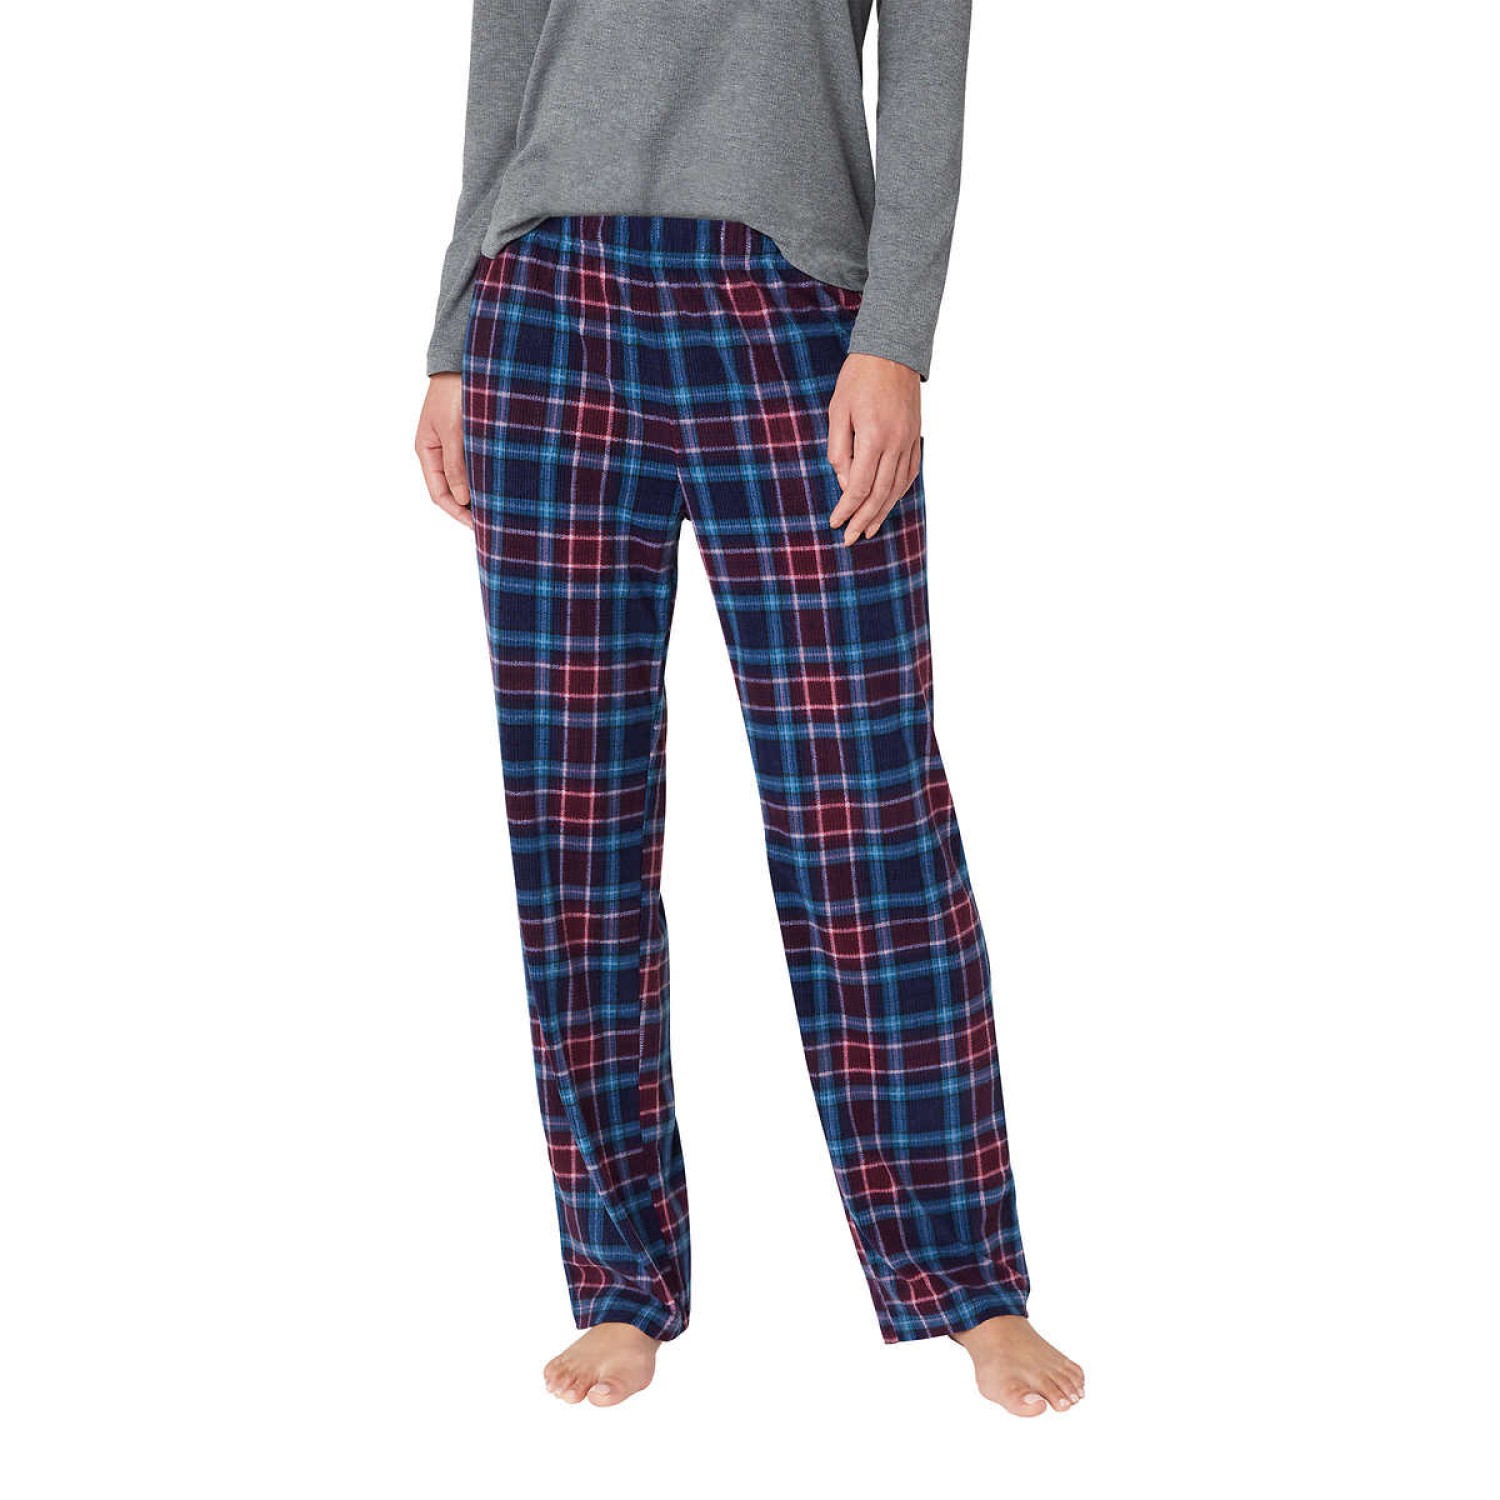 Eddie Bauer Ladies' 3-Piece Waffle Fleece Pajama Set, Gray, Medium